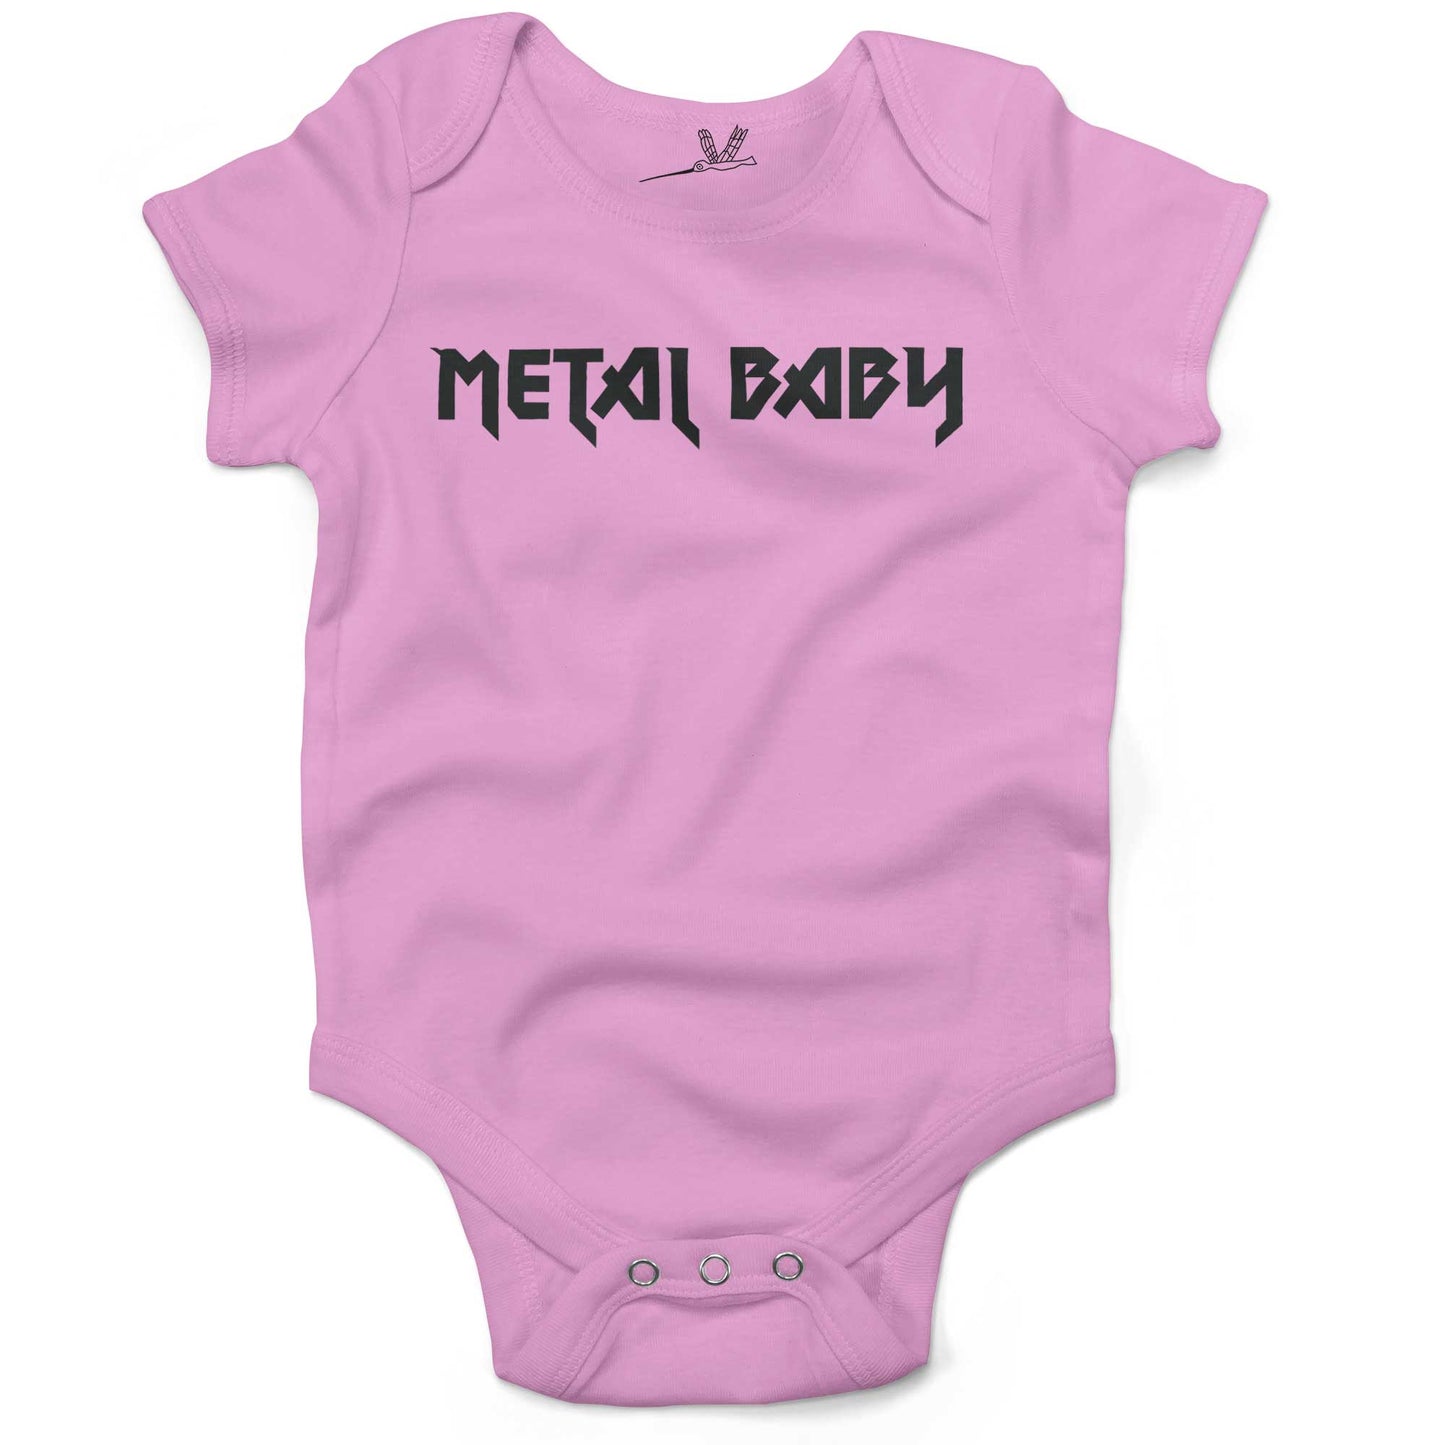 Metal Baby Infant Bodysuit or Raglan Baby Tee-Organic Pink-3-6 months